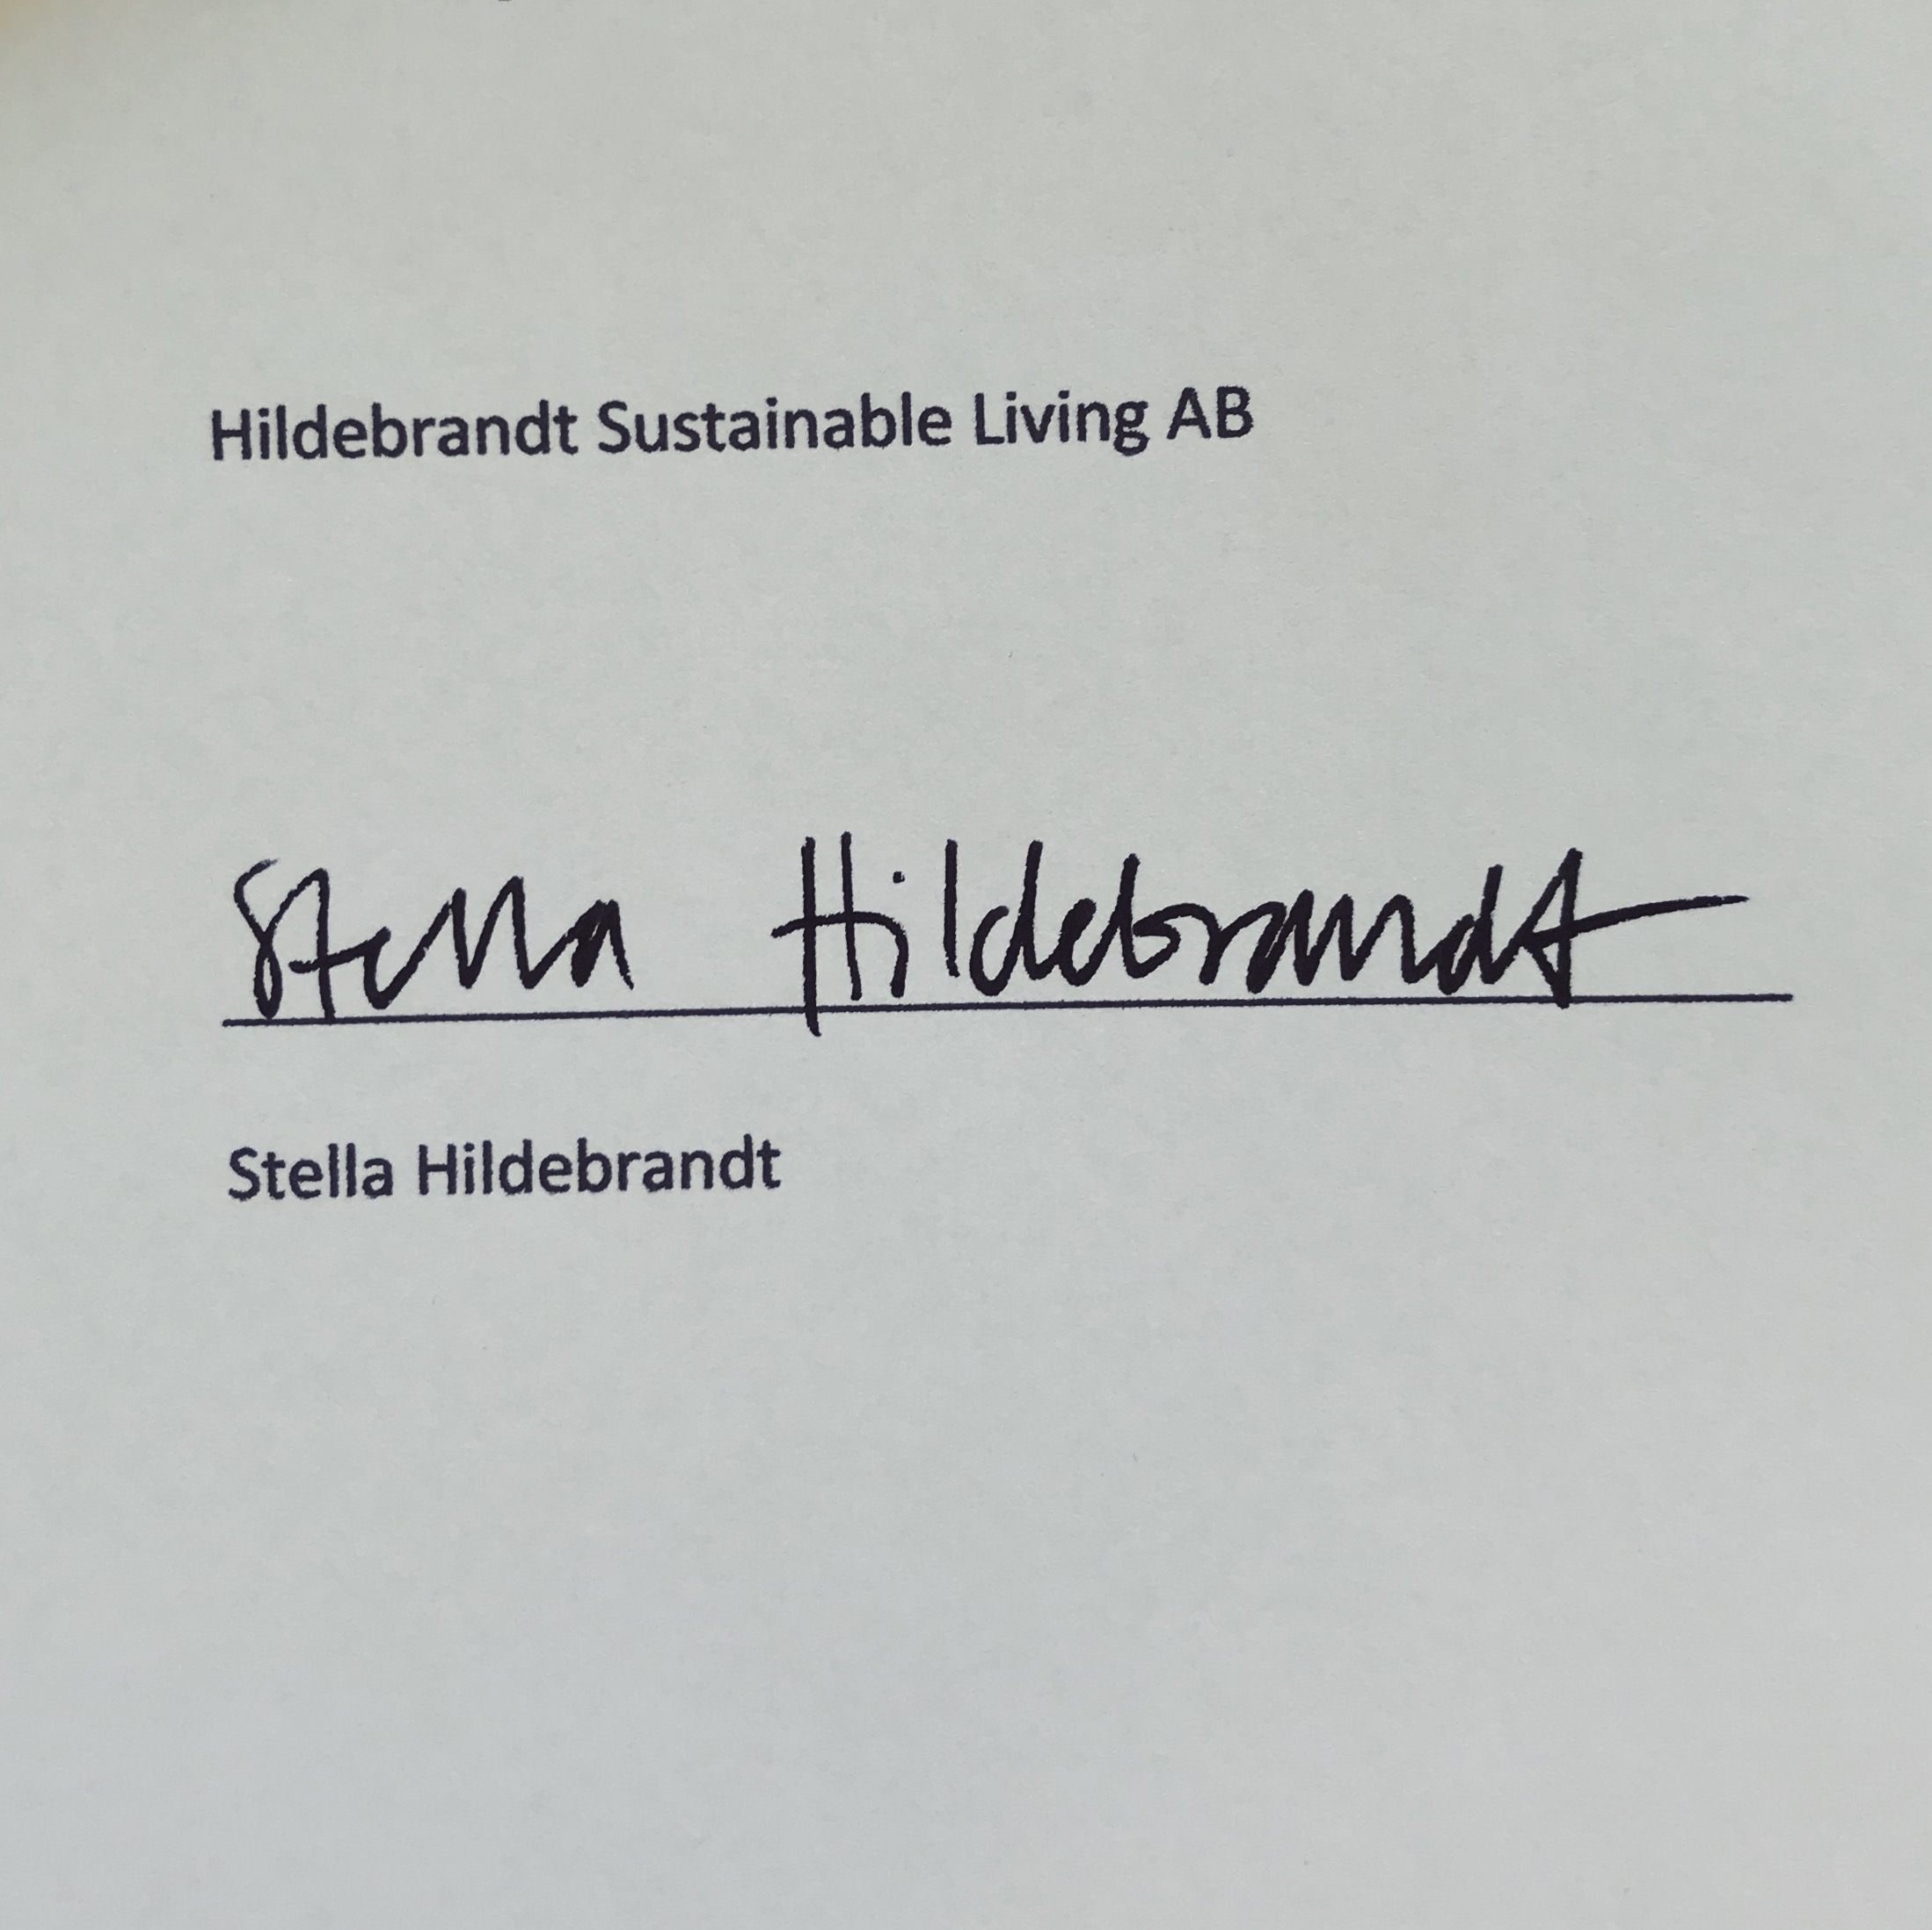 AB-Hildebrandt-sustainable-living